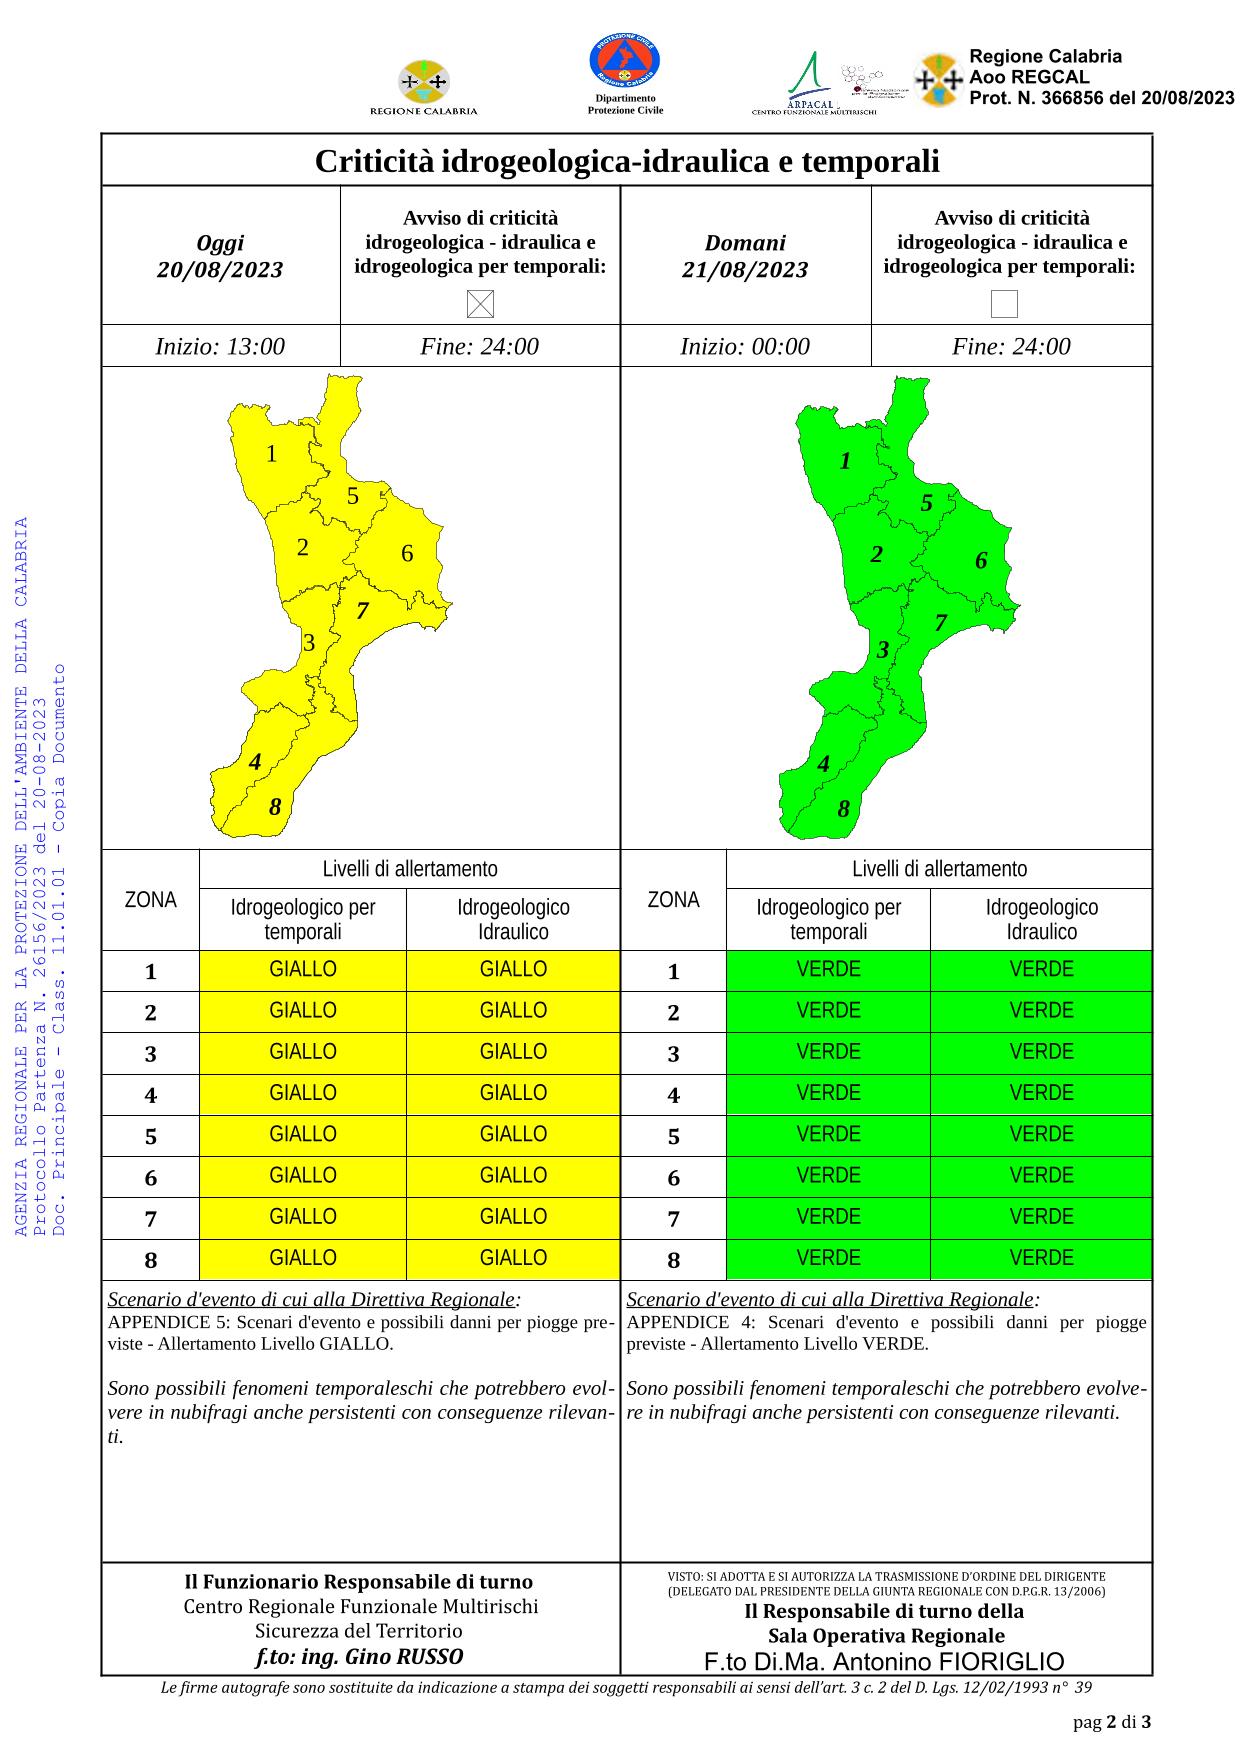 Criticità idrogeologica-idraulica e temporali in Calabria 20-08-2023